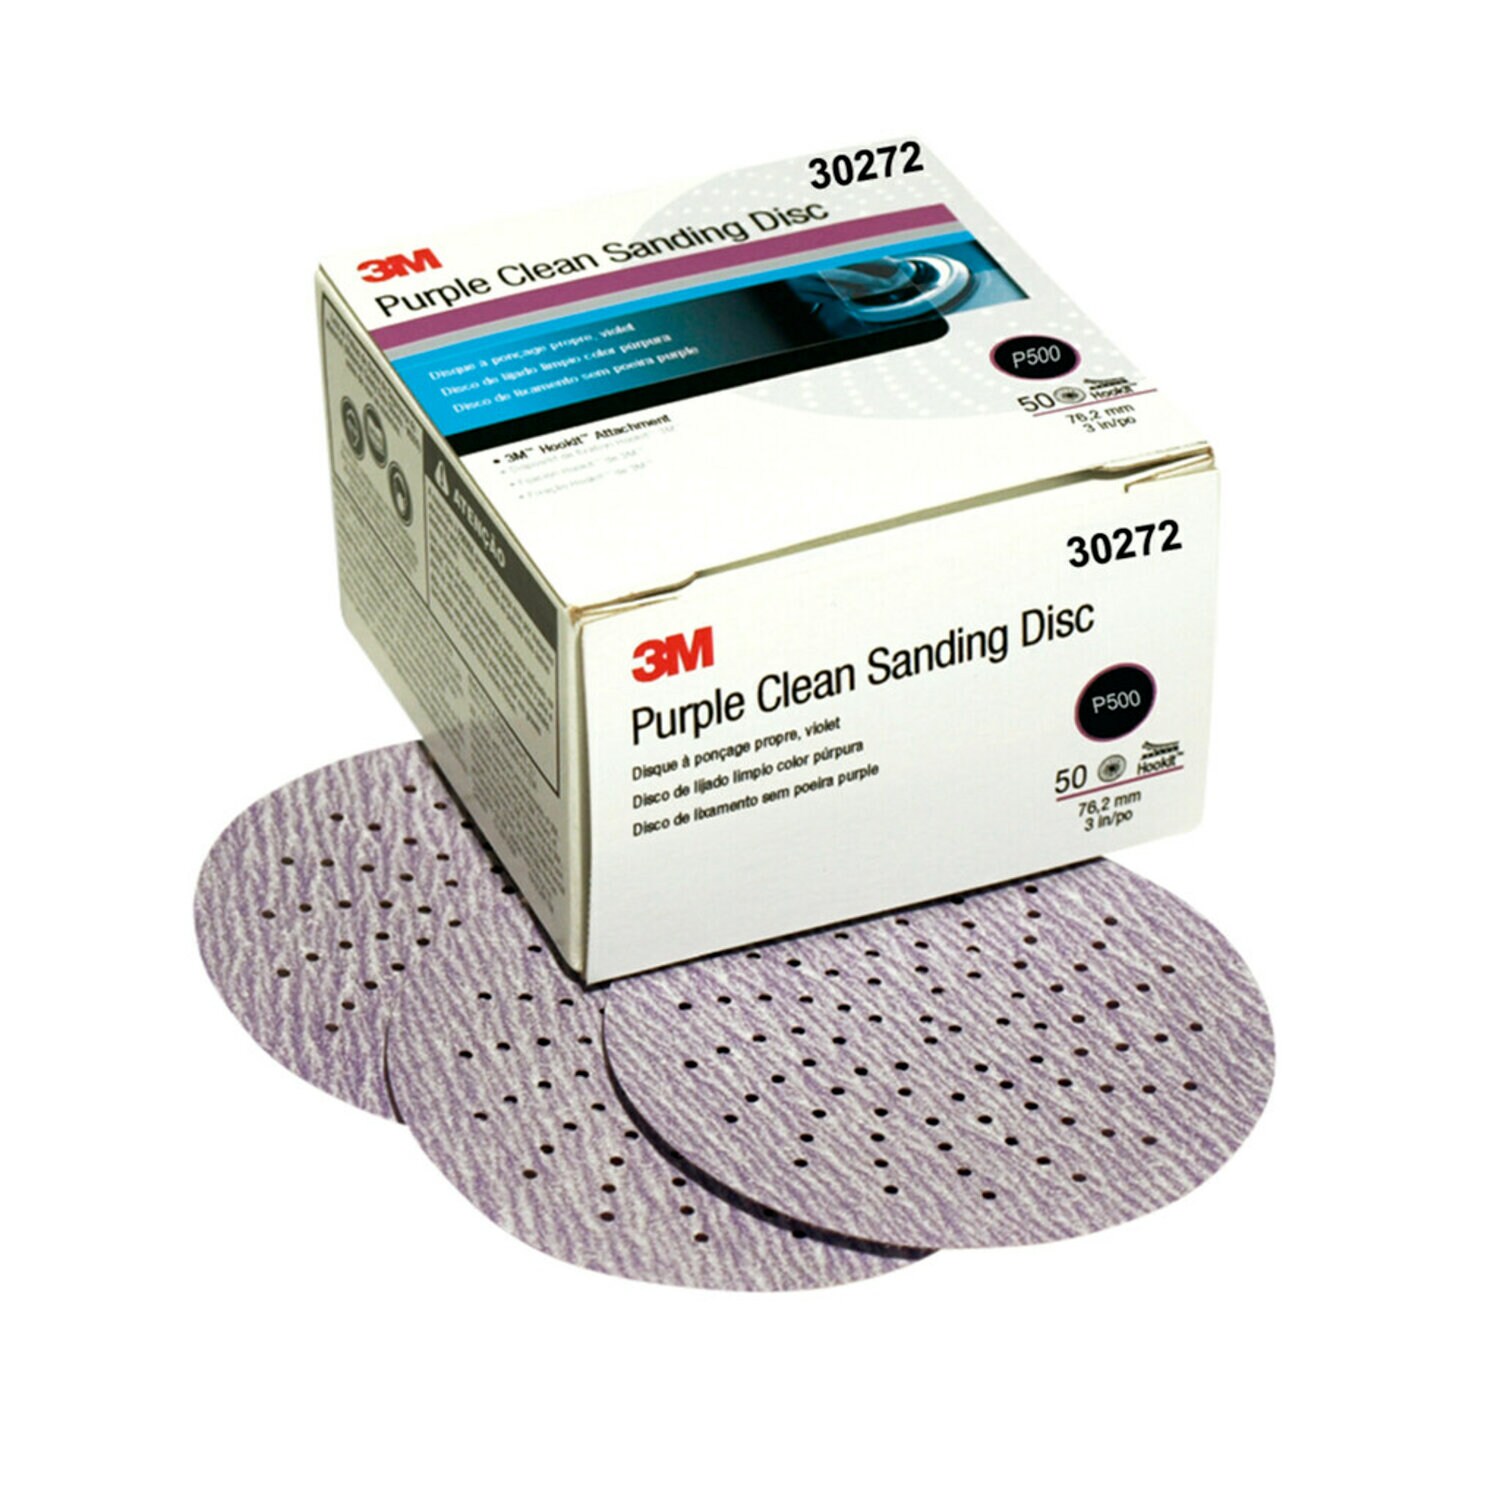 7000000488 - 3M Hookit Purple Clean Sanding Disc 343U, 30272, P500, 50 discs per
carton, 4 cartons per case